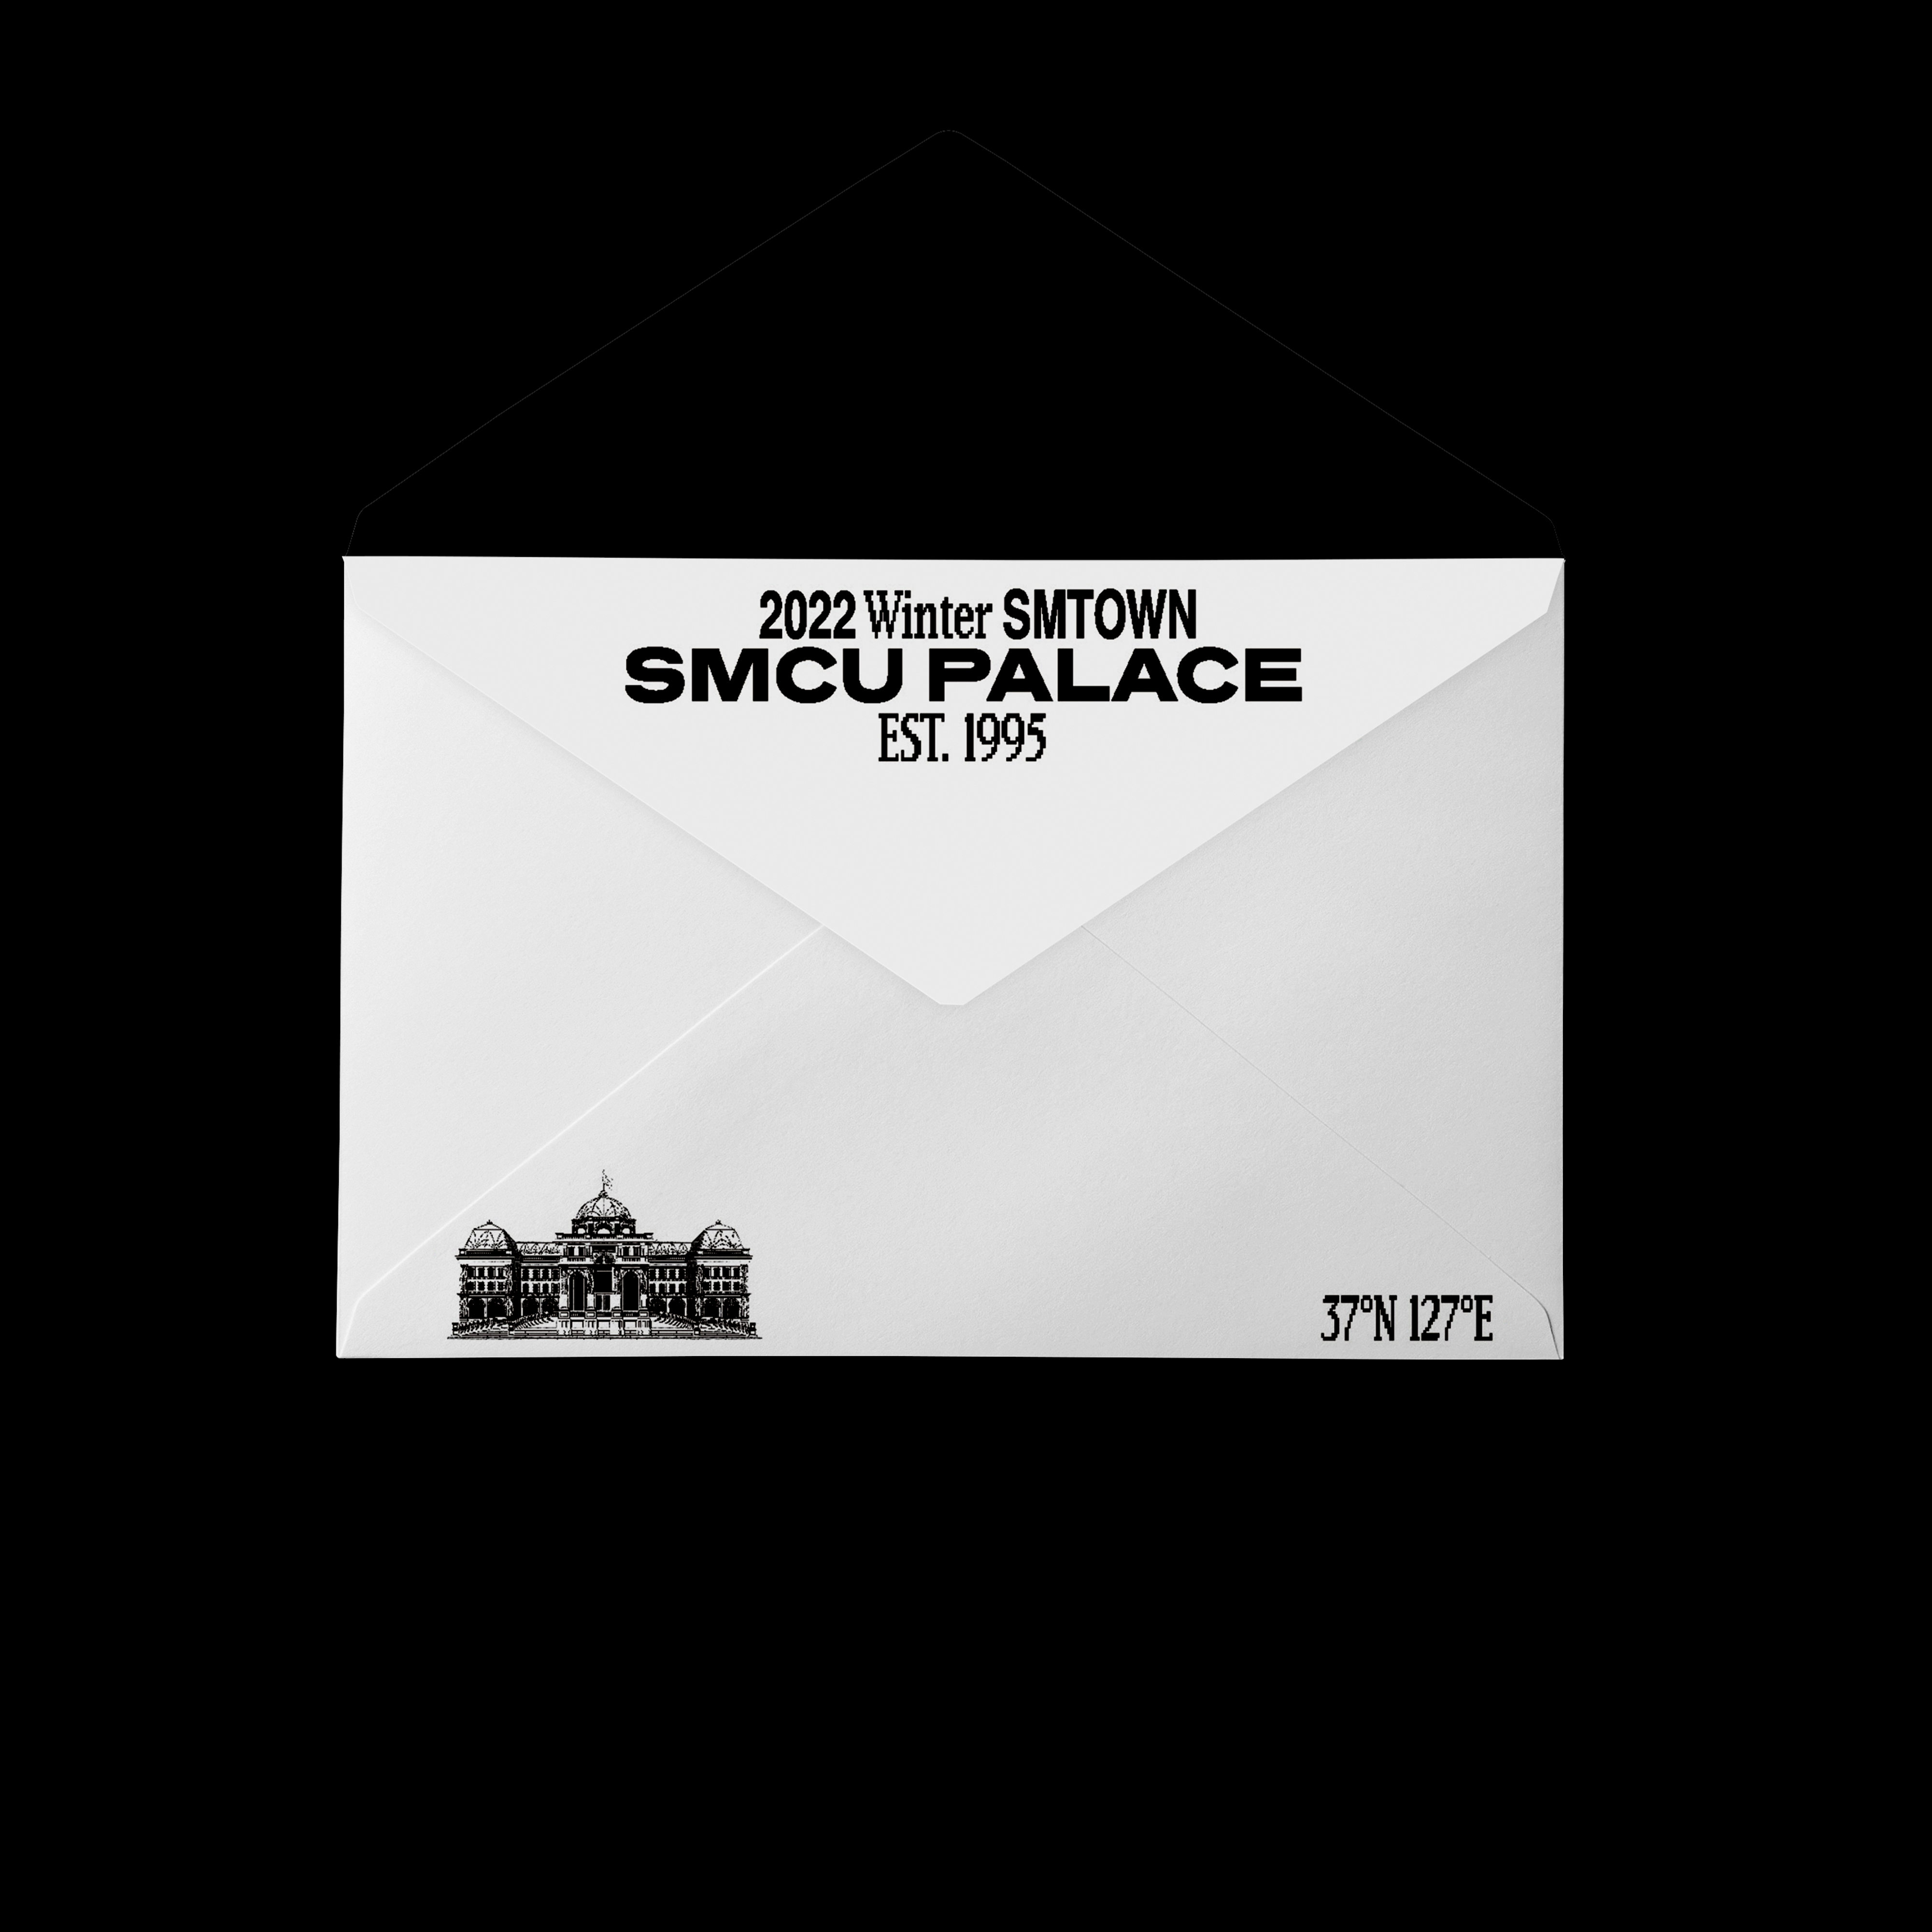 [全款 裸专] Super Junior - 2022 Winter SMTOWN : SMCU PALACE (GUEST. SUPER JUNIOR) (Membership Card Ver.) _李东海后援会海世代